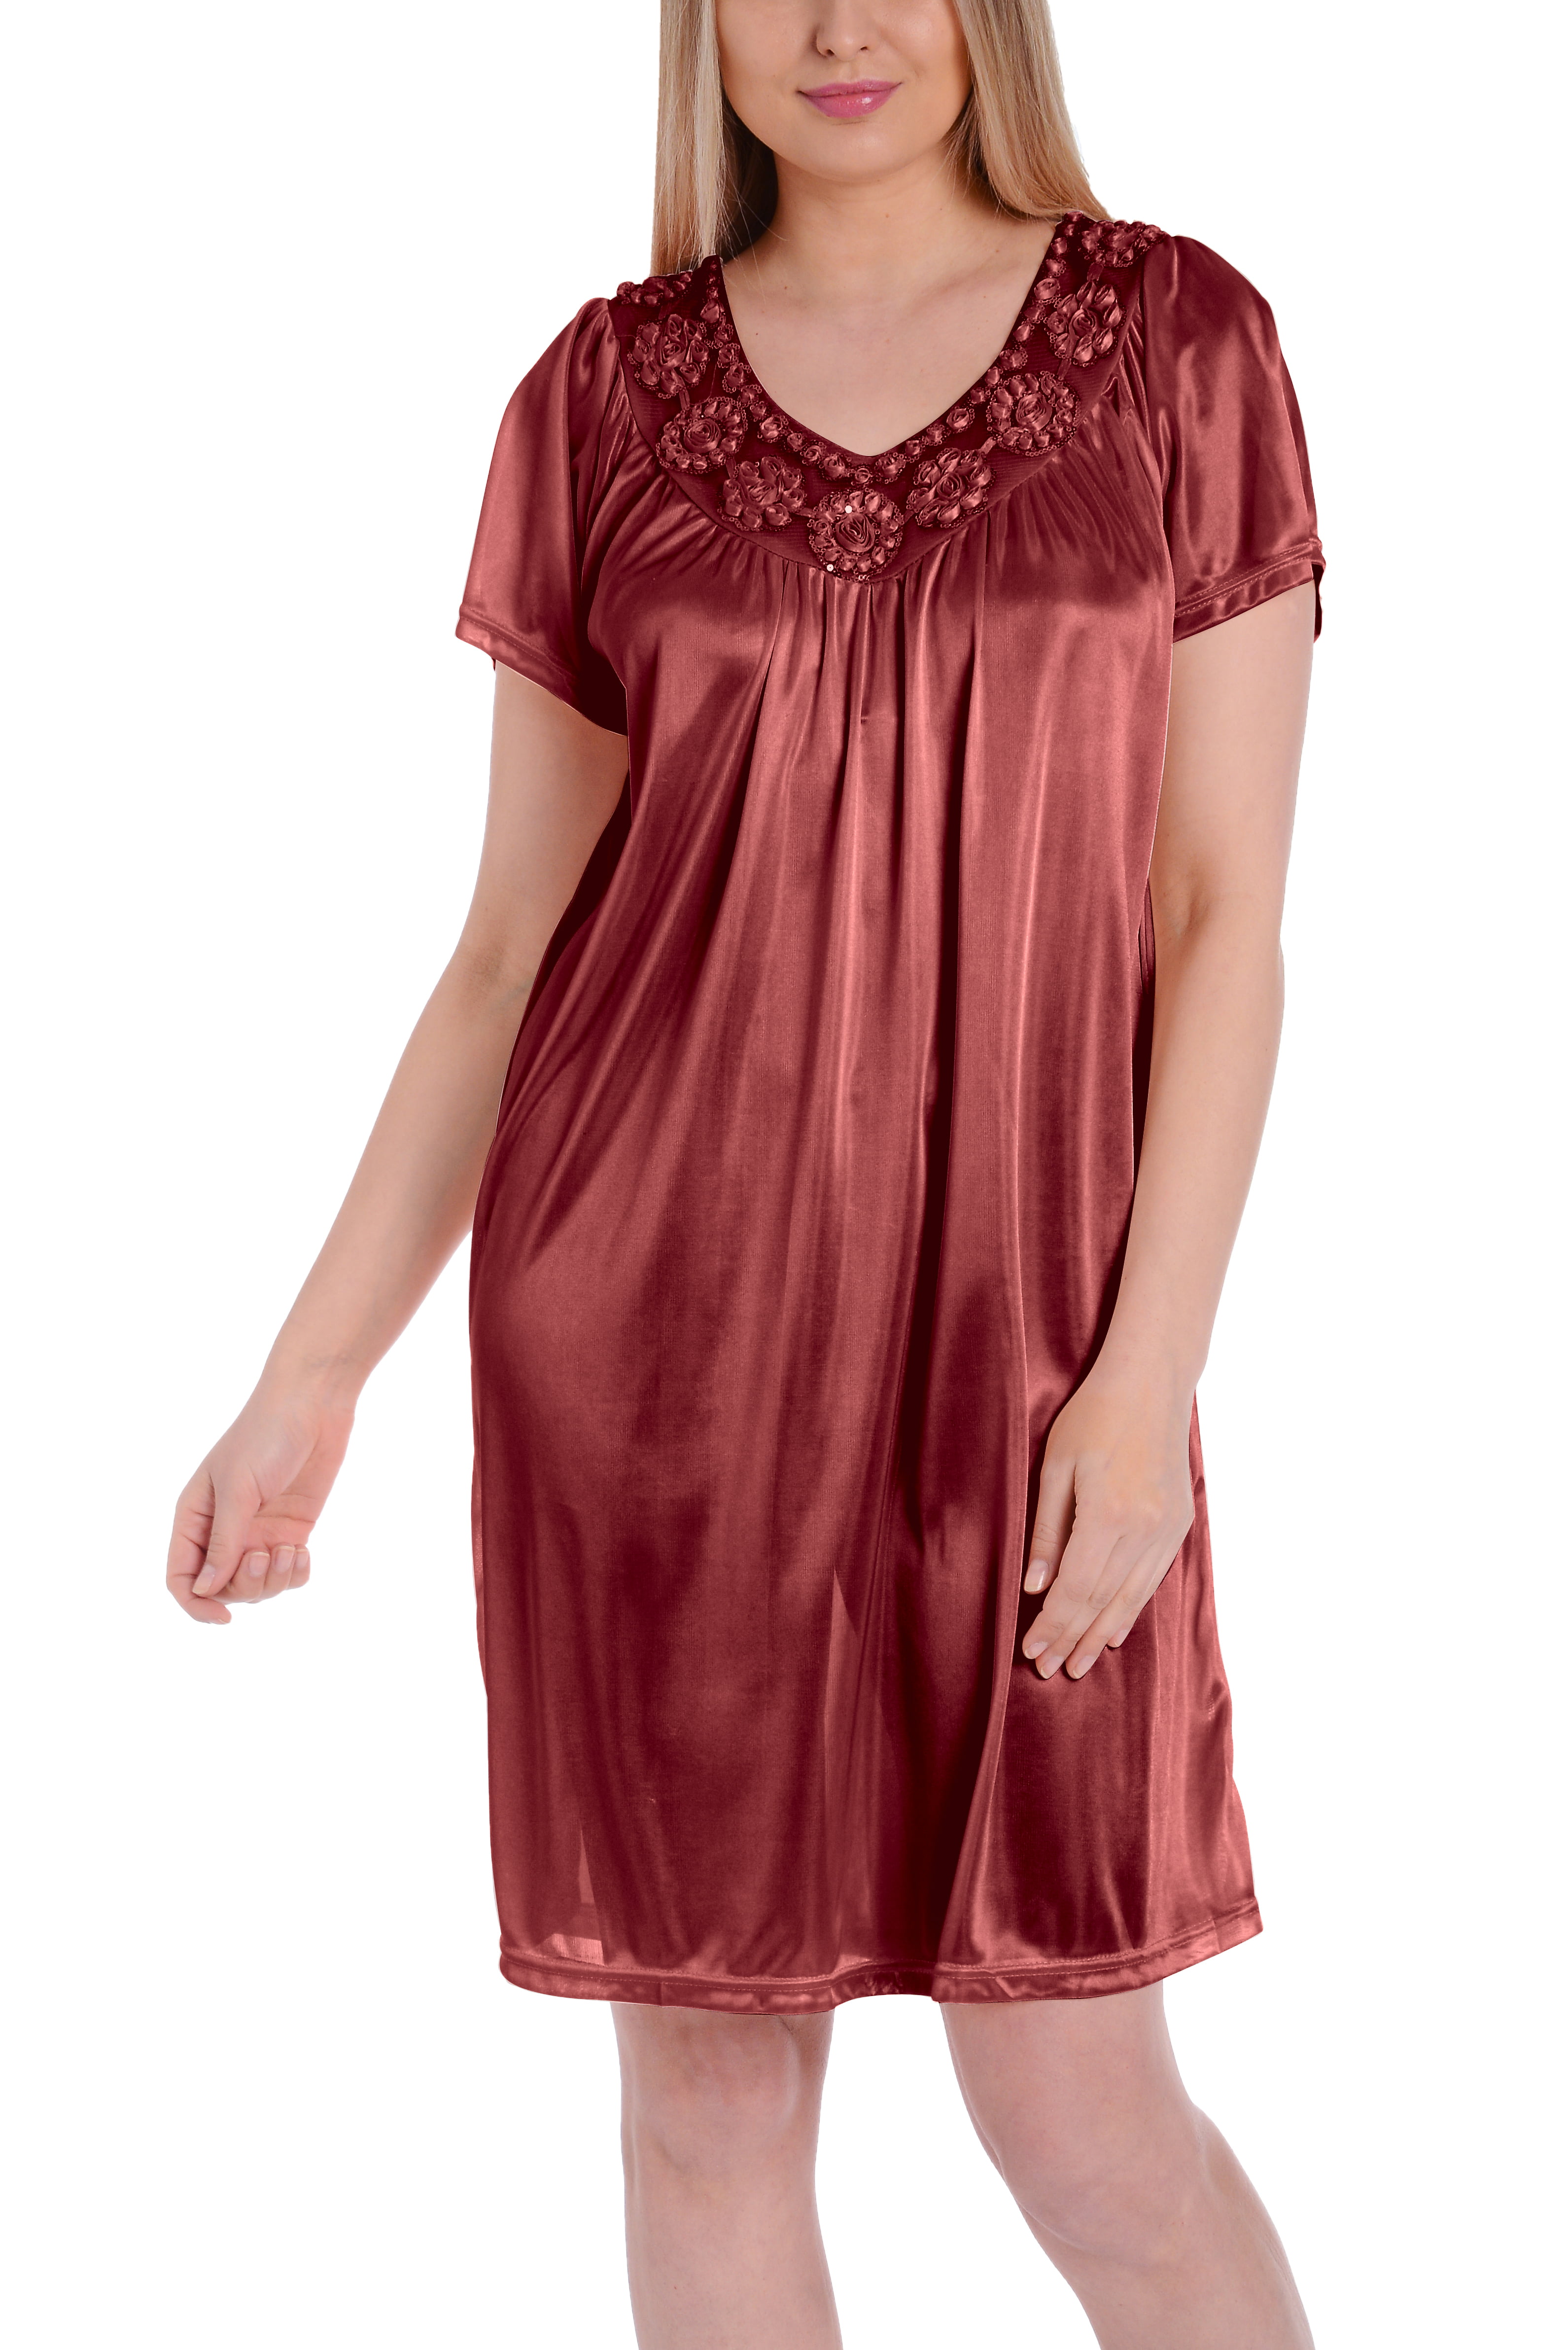 Buy Ezi Womens Plus Satin Silk Short Sleeve Sequins Nightgown Online In India 438595015 